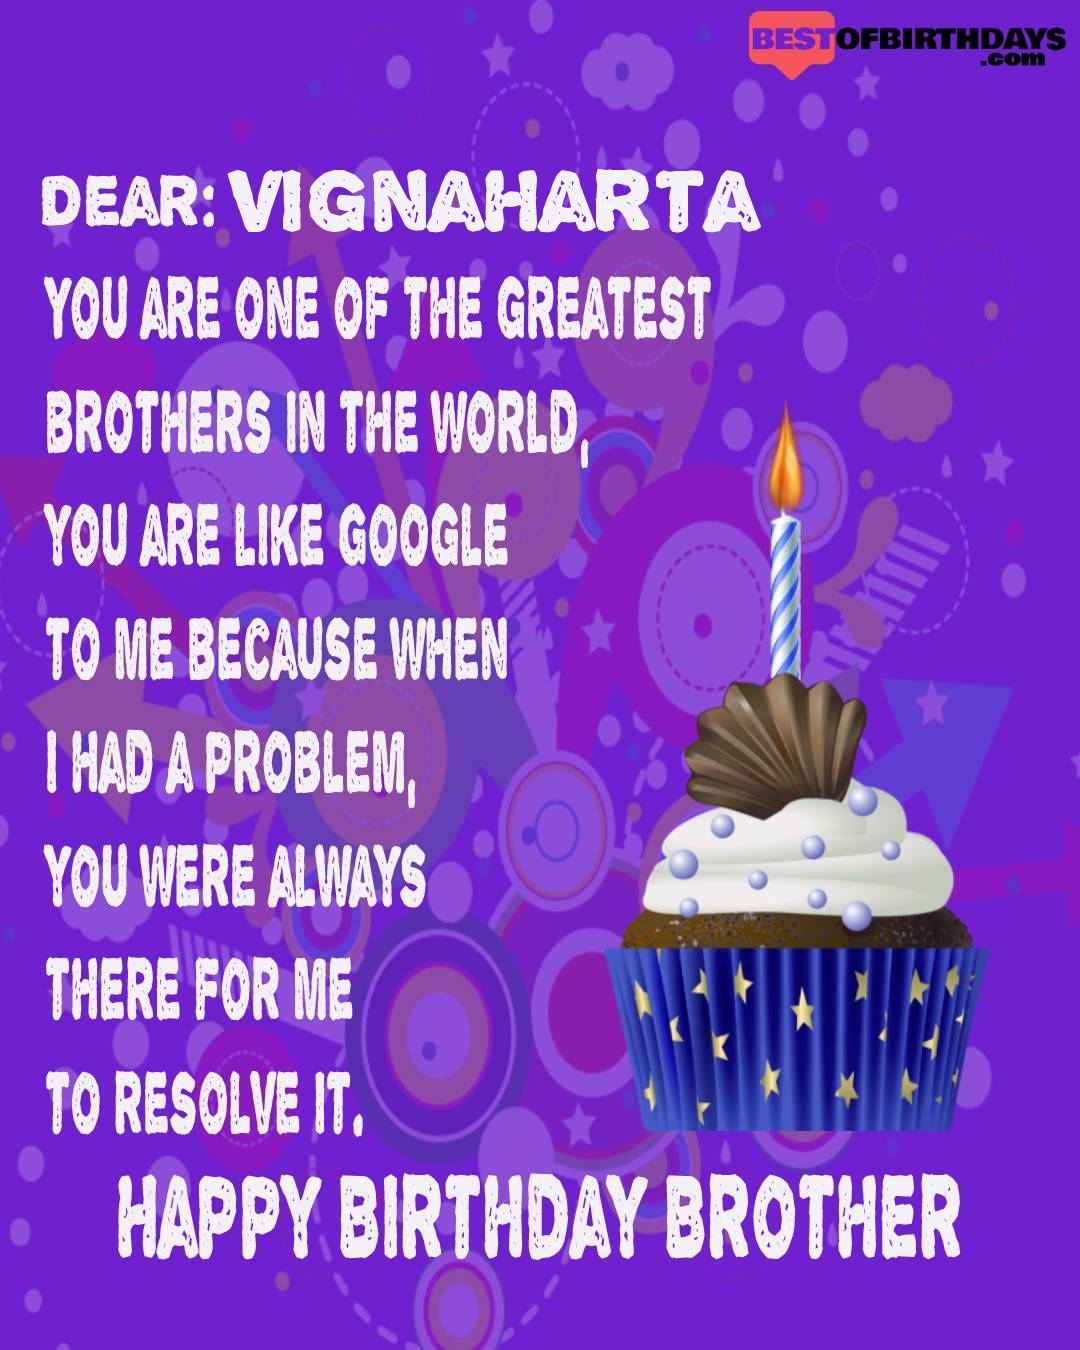 Happy birthday vignaharta bhai brother bro